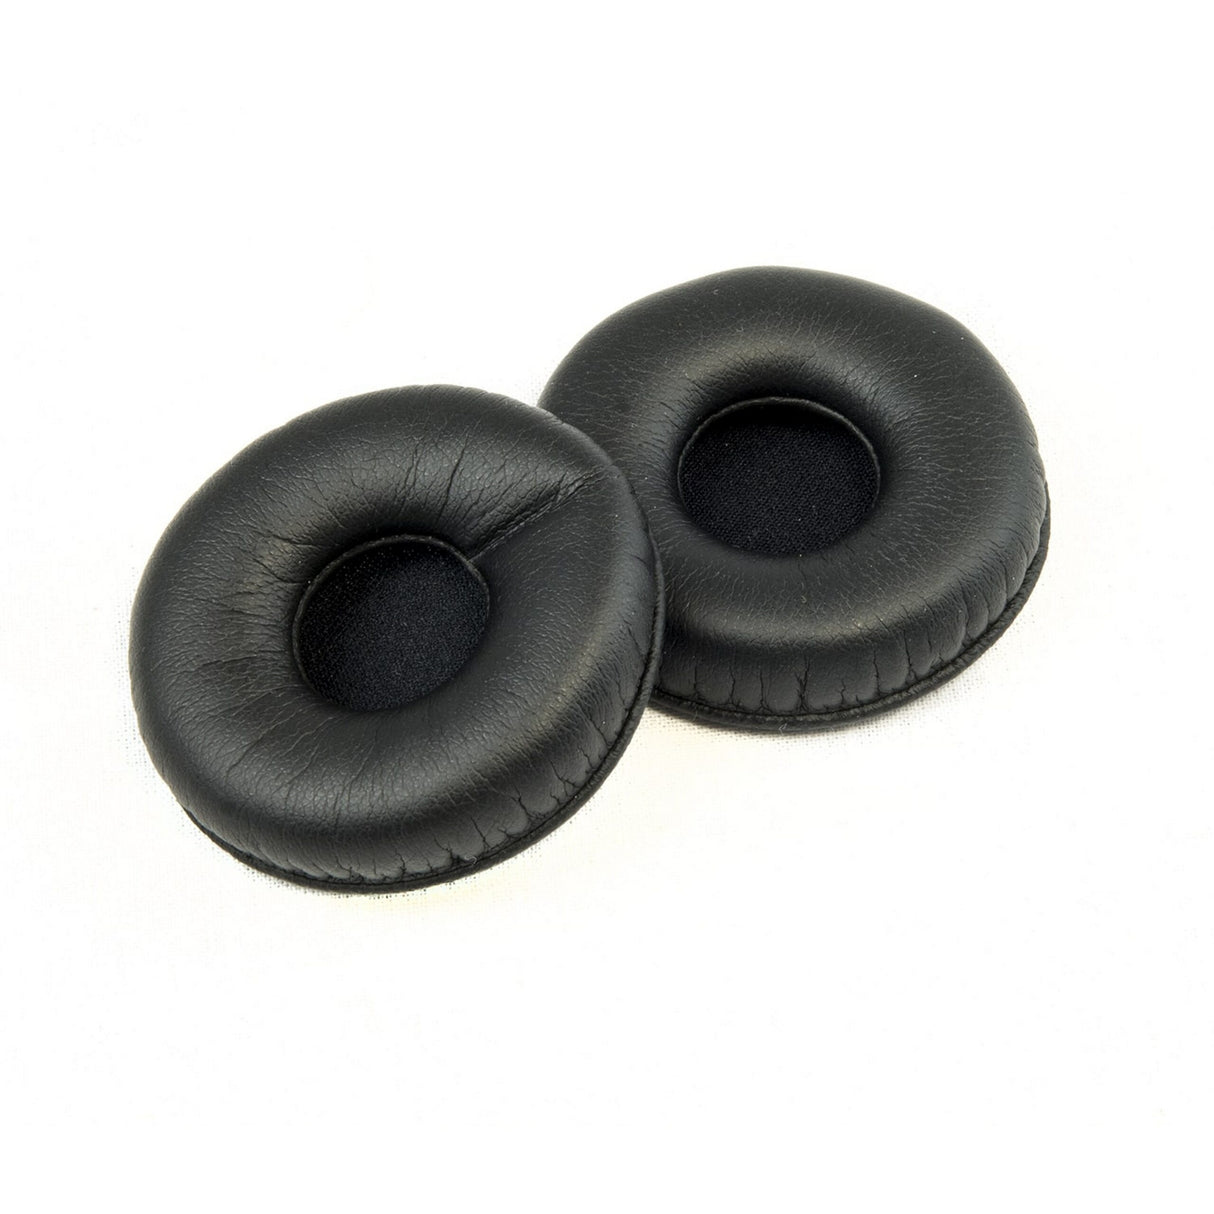 Listen Tech LA-441 Replacement Ear Cushions for ListenTALK 2/3, 10 Pack